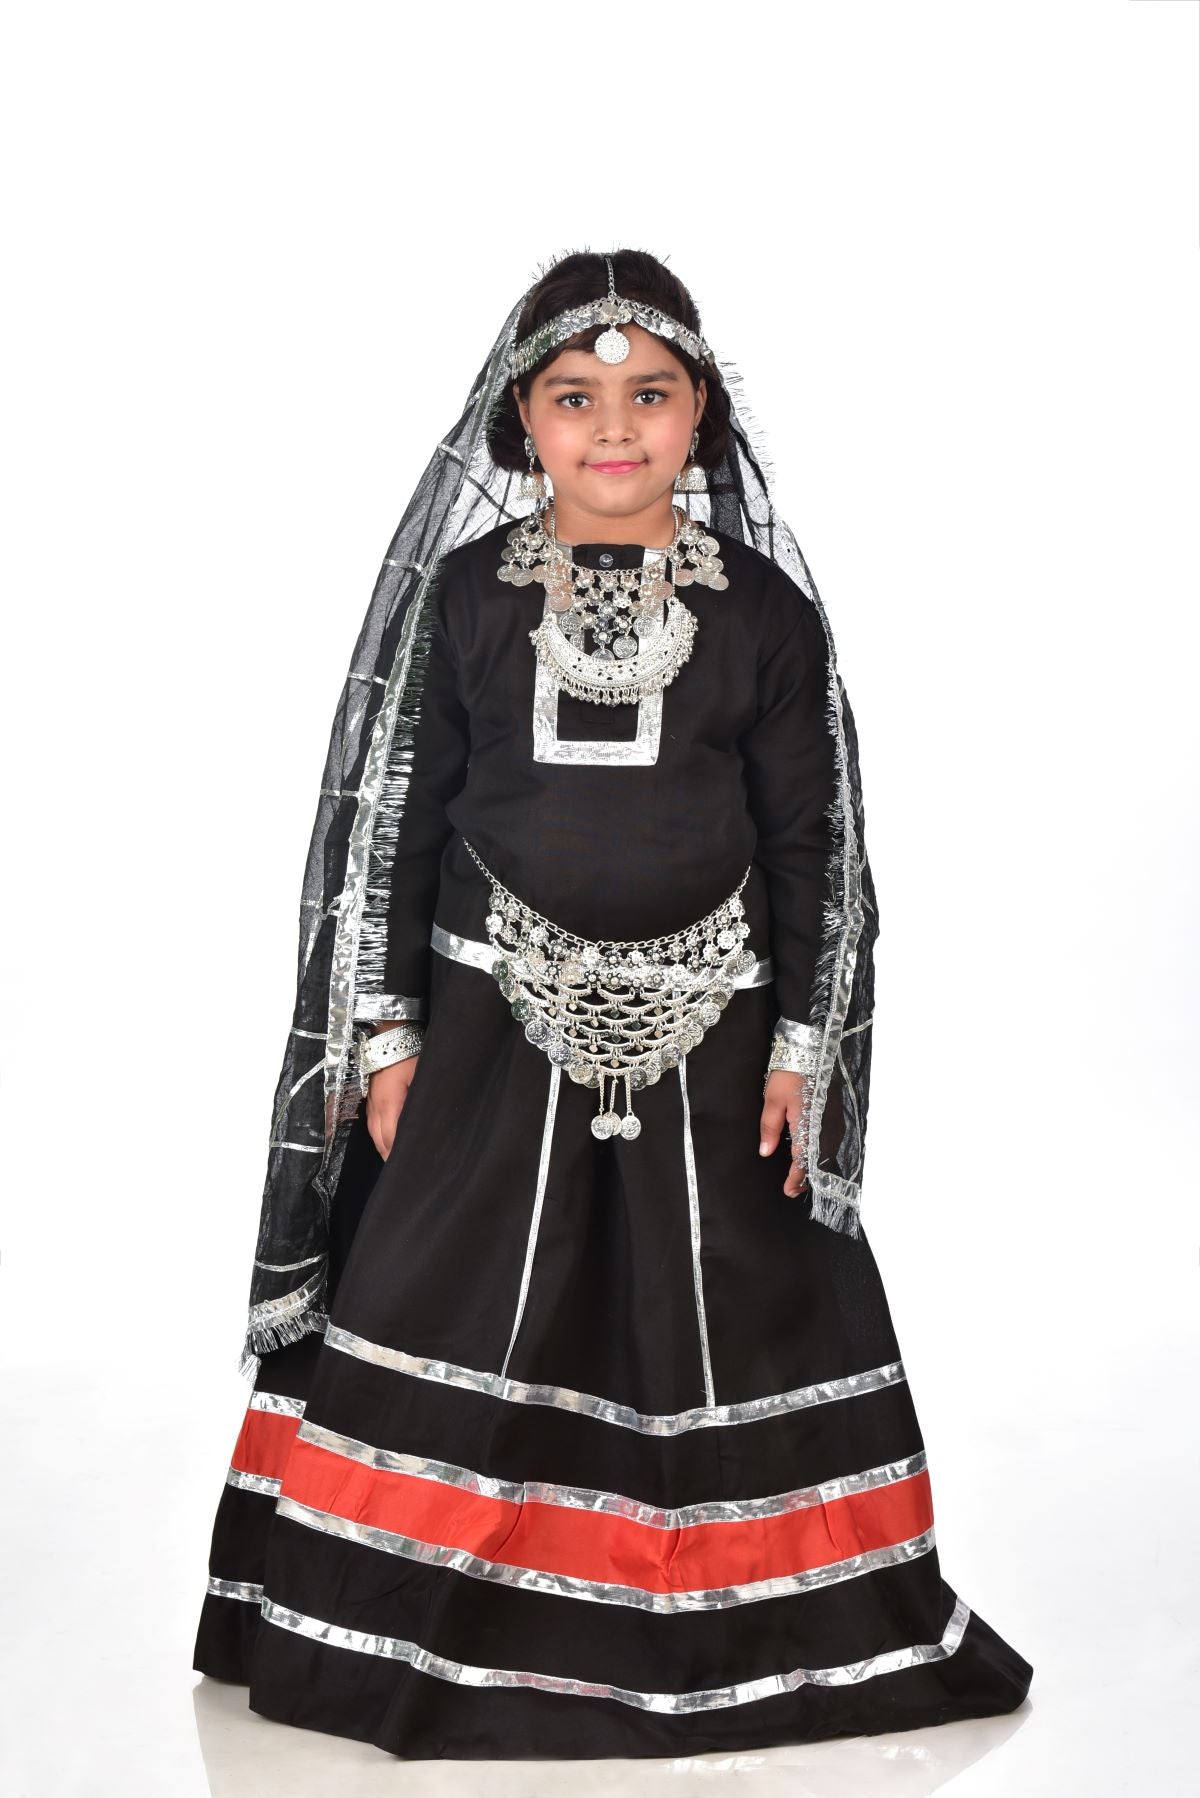 Mouni roy in #colorful #Indian #dress #rk | Indian attire, Navratri dress,  Choli designs